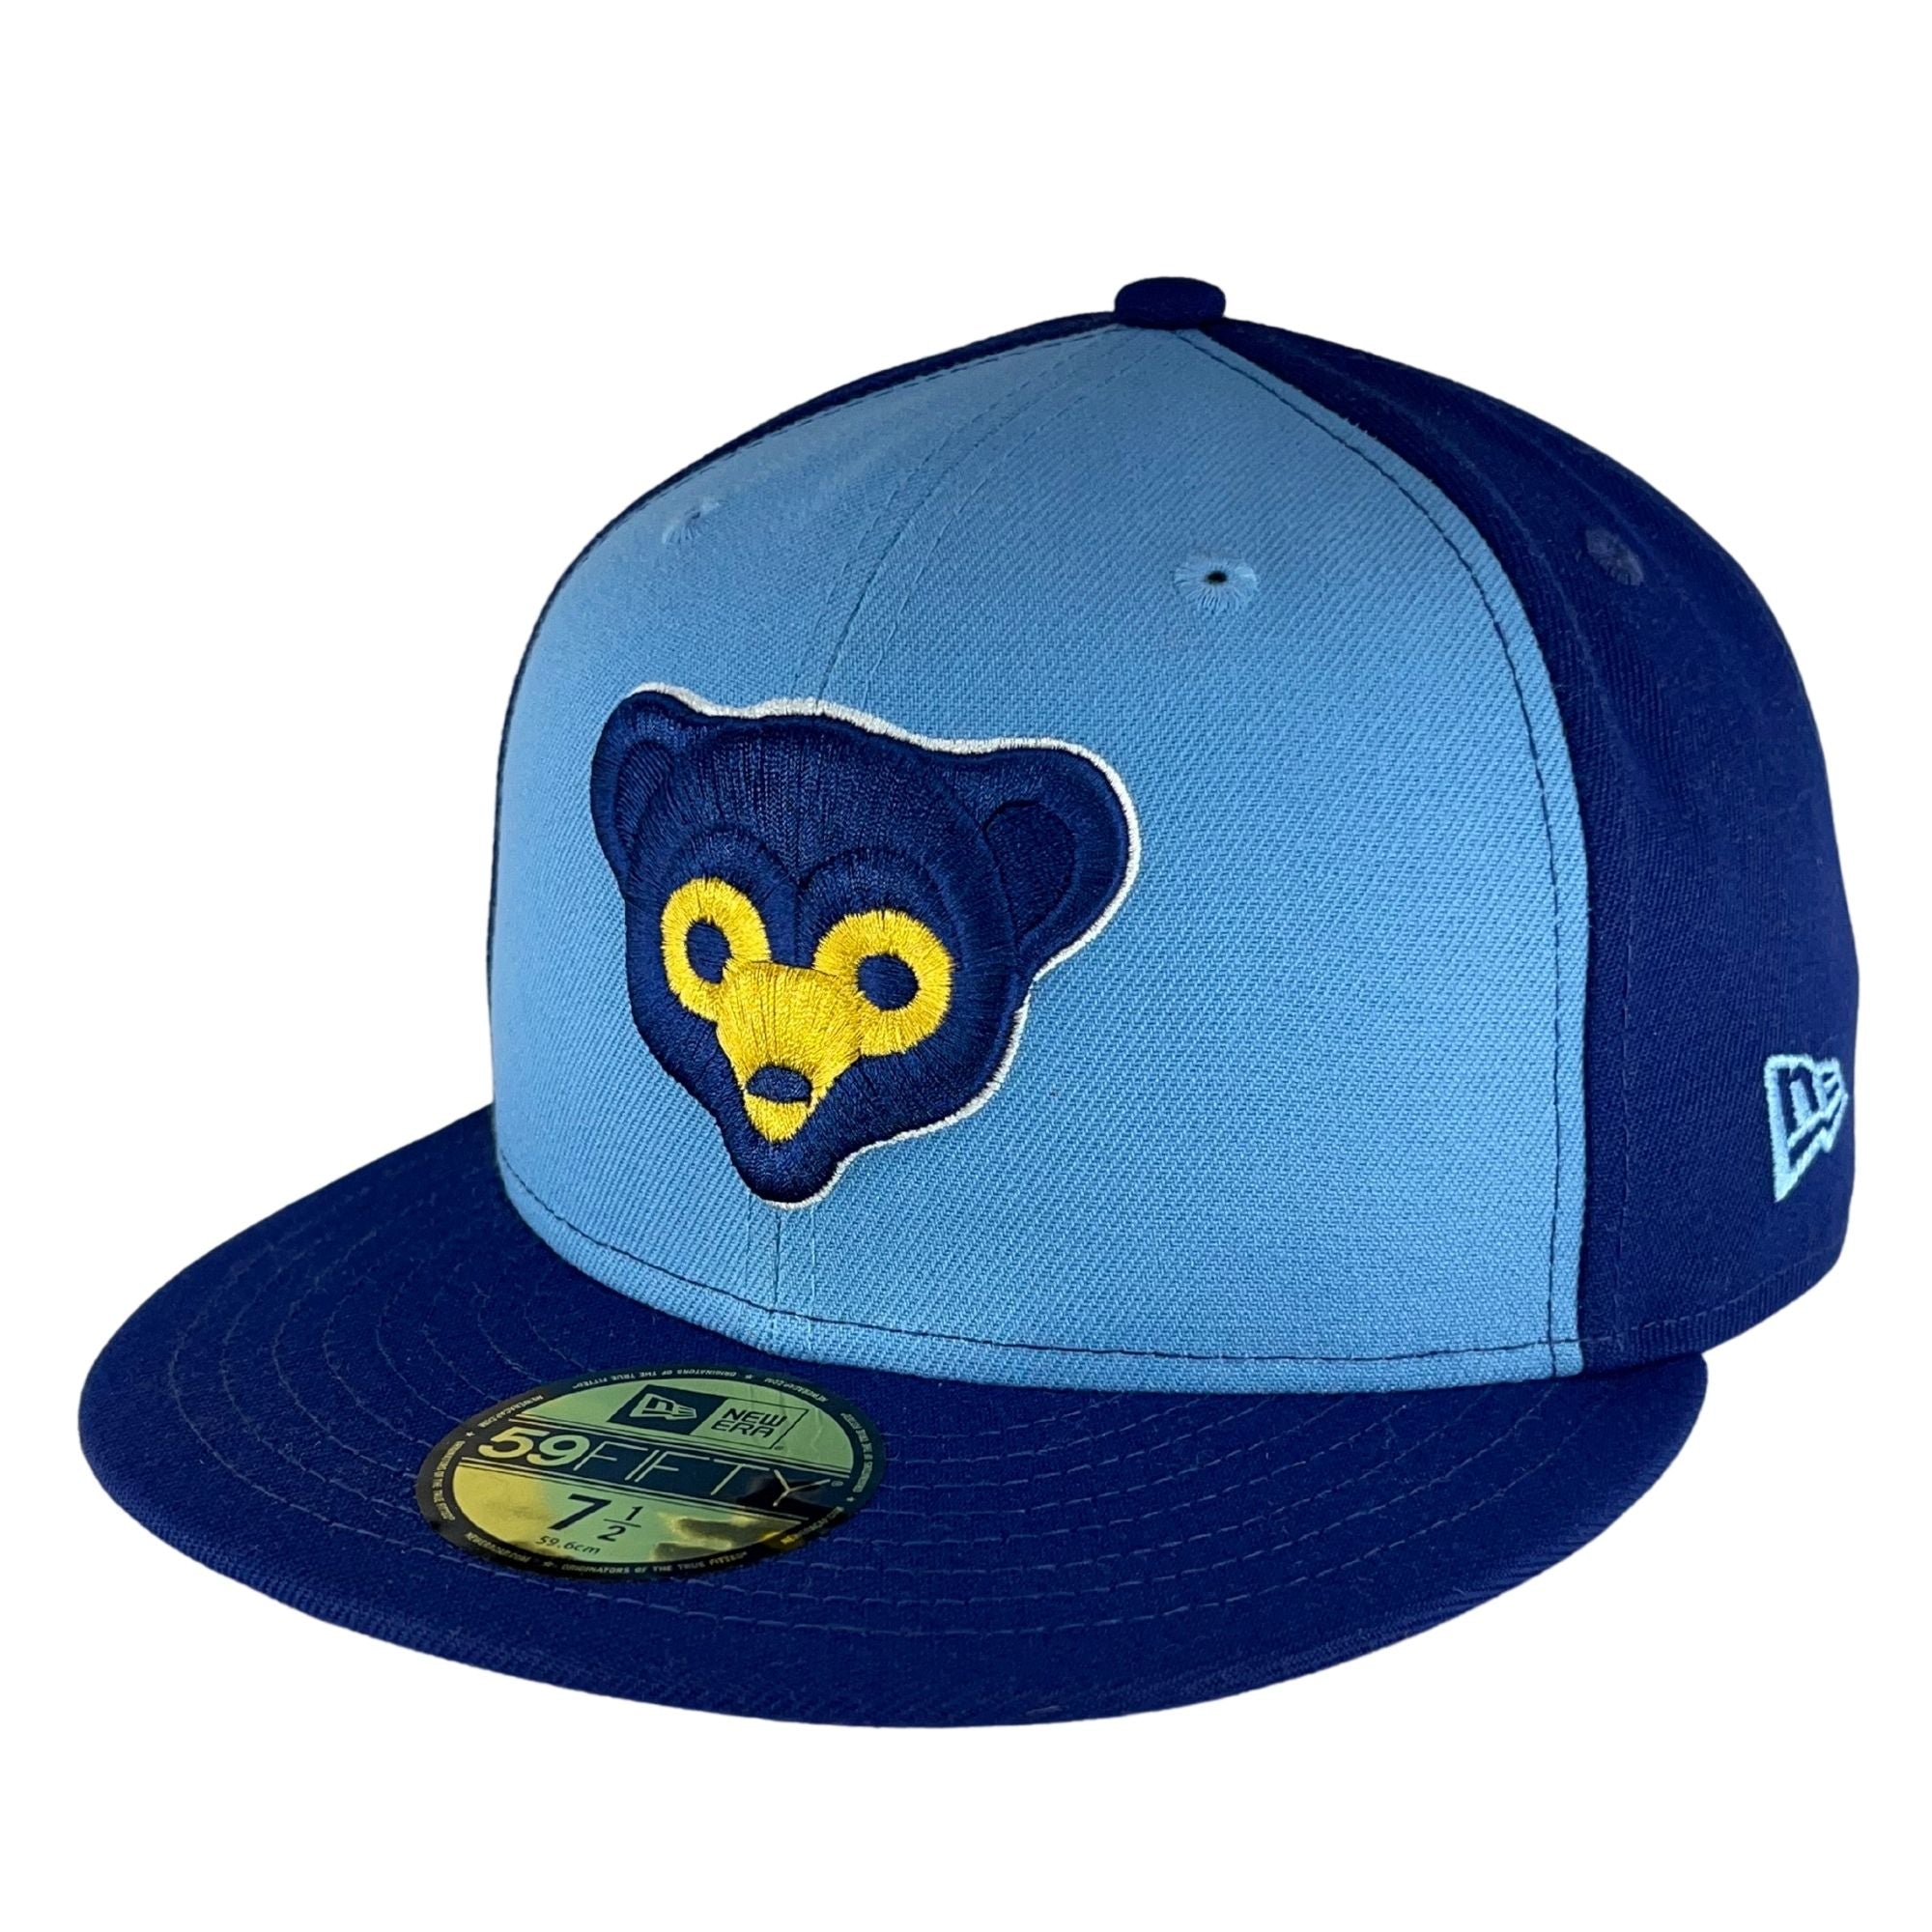 Chicago Cubs 47 Brand 1969 Light Blue Cap